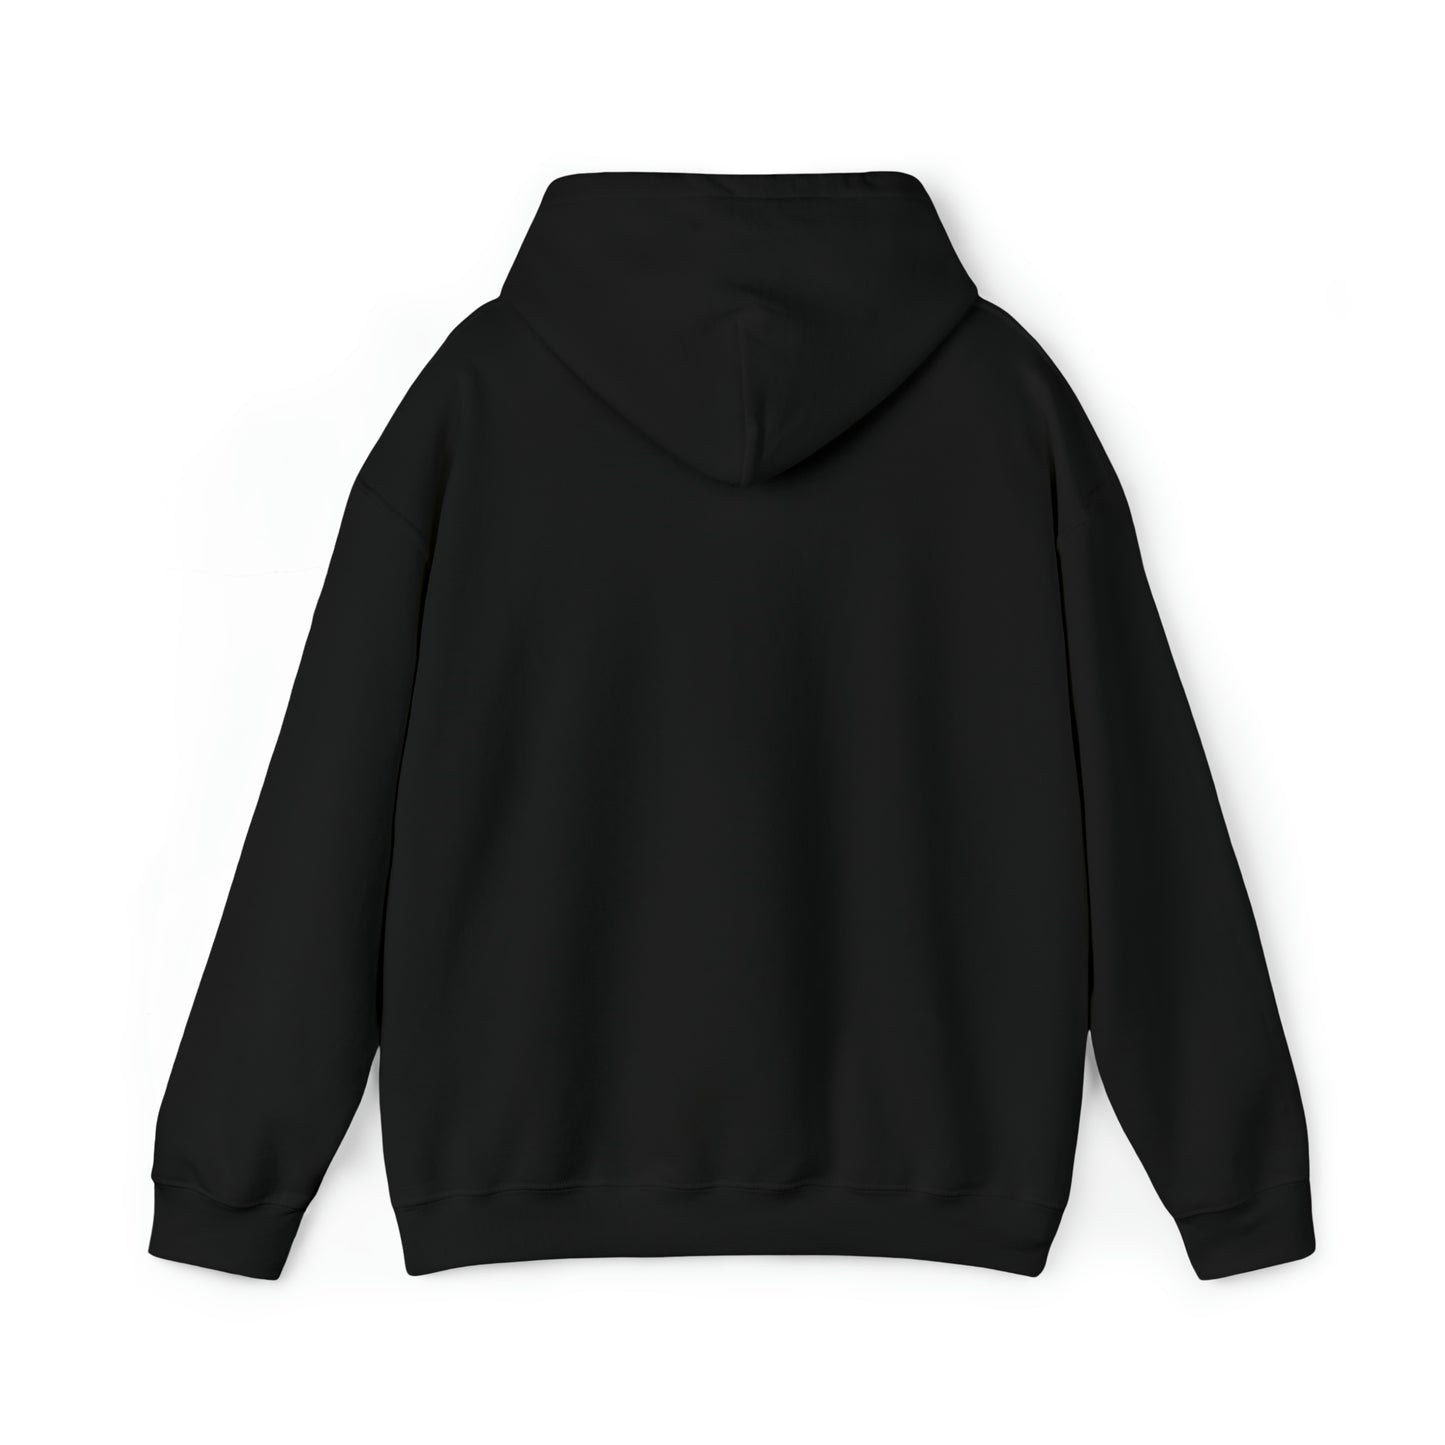 highDEAS™ Unisex Heavy Blend™ Hooded Sweatshirt